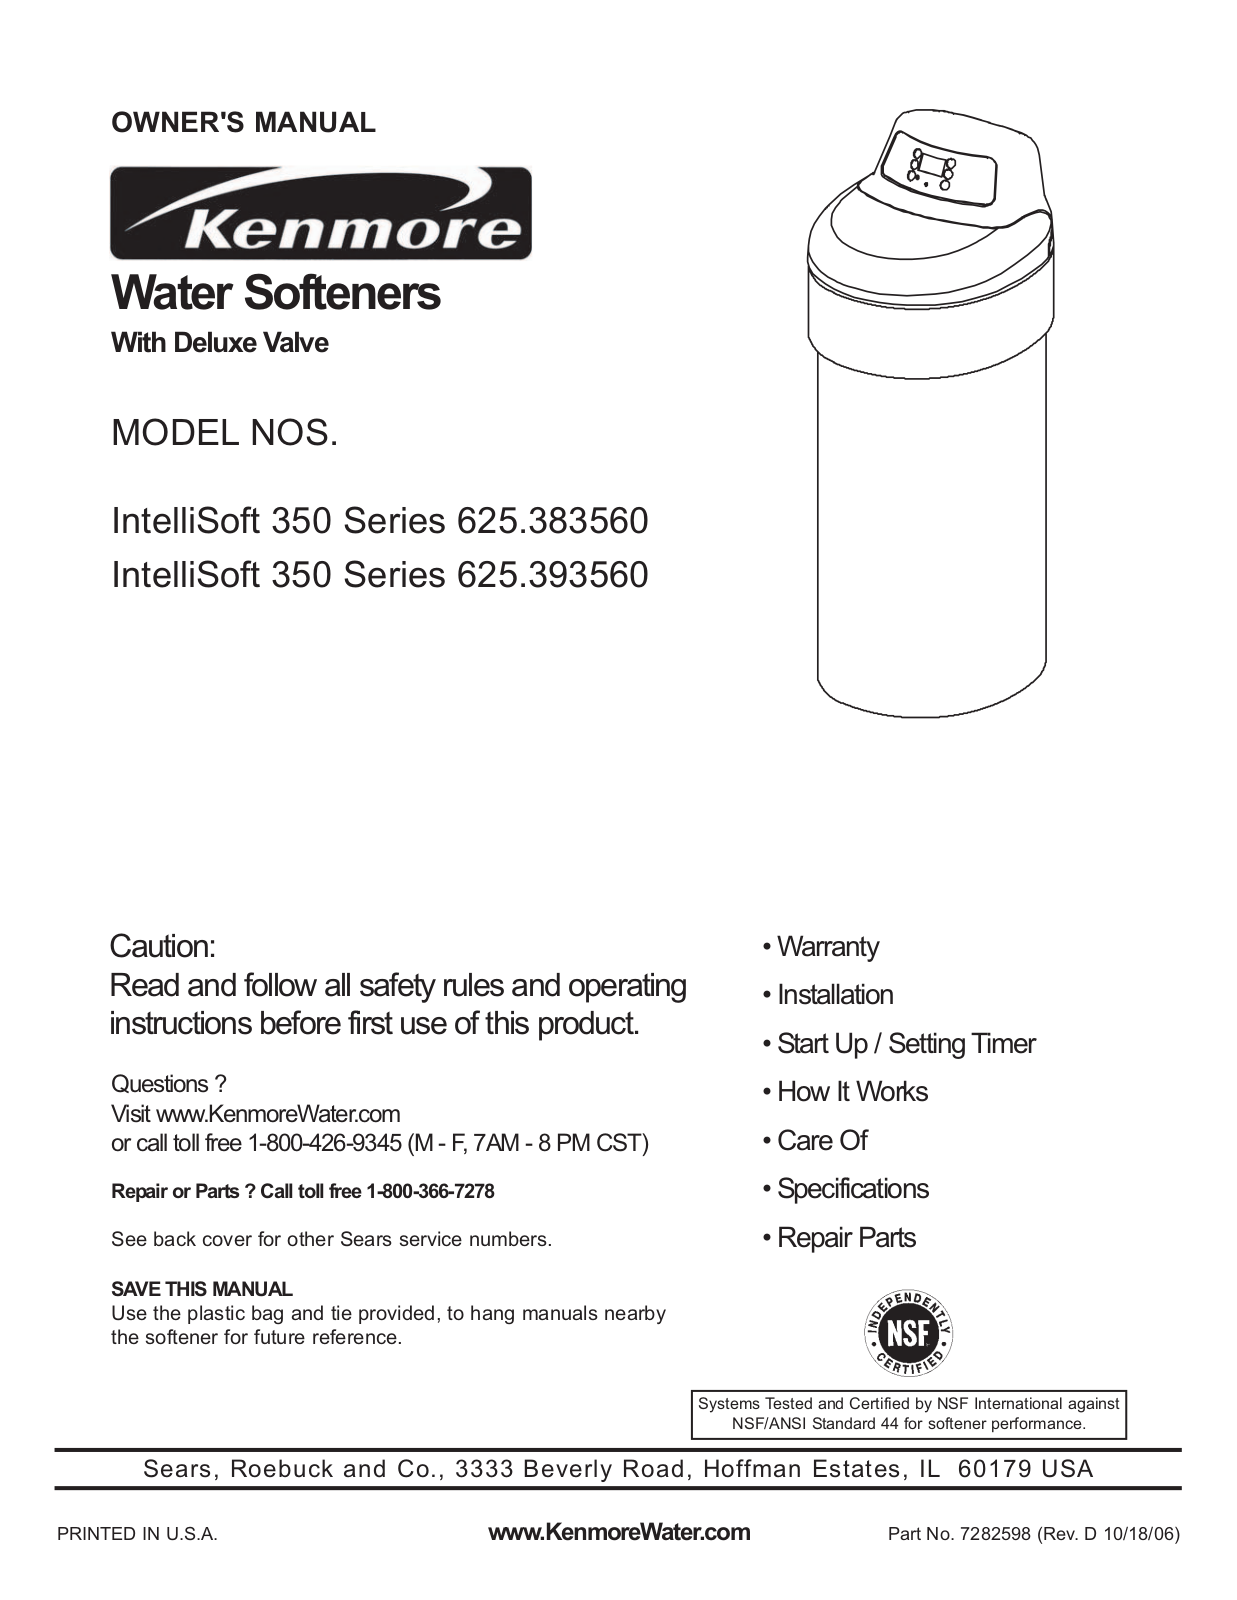 Kenmore IntelliSoft 350 Series Owner's Manual